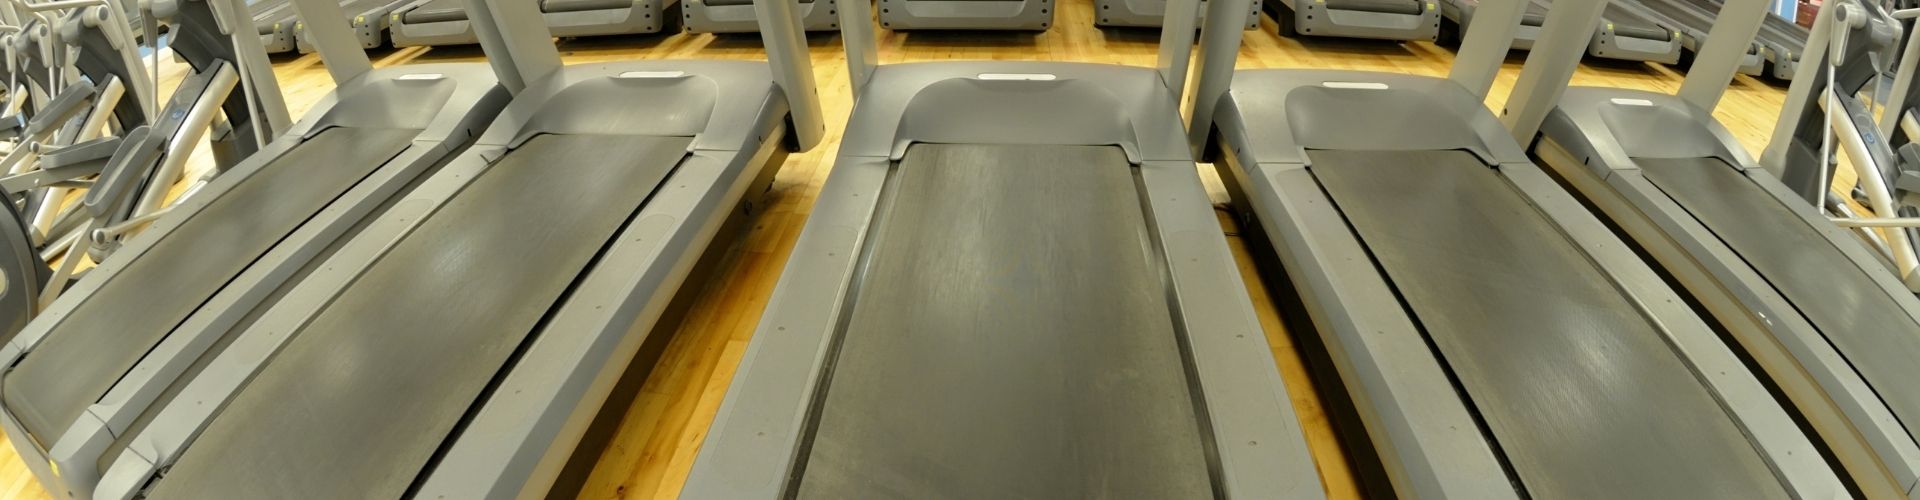 large treadmill mat